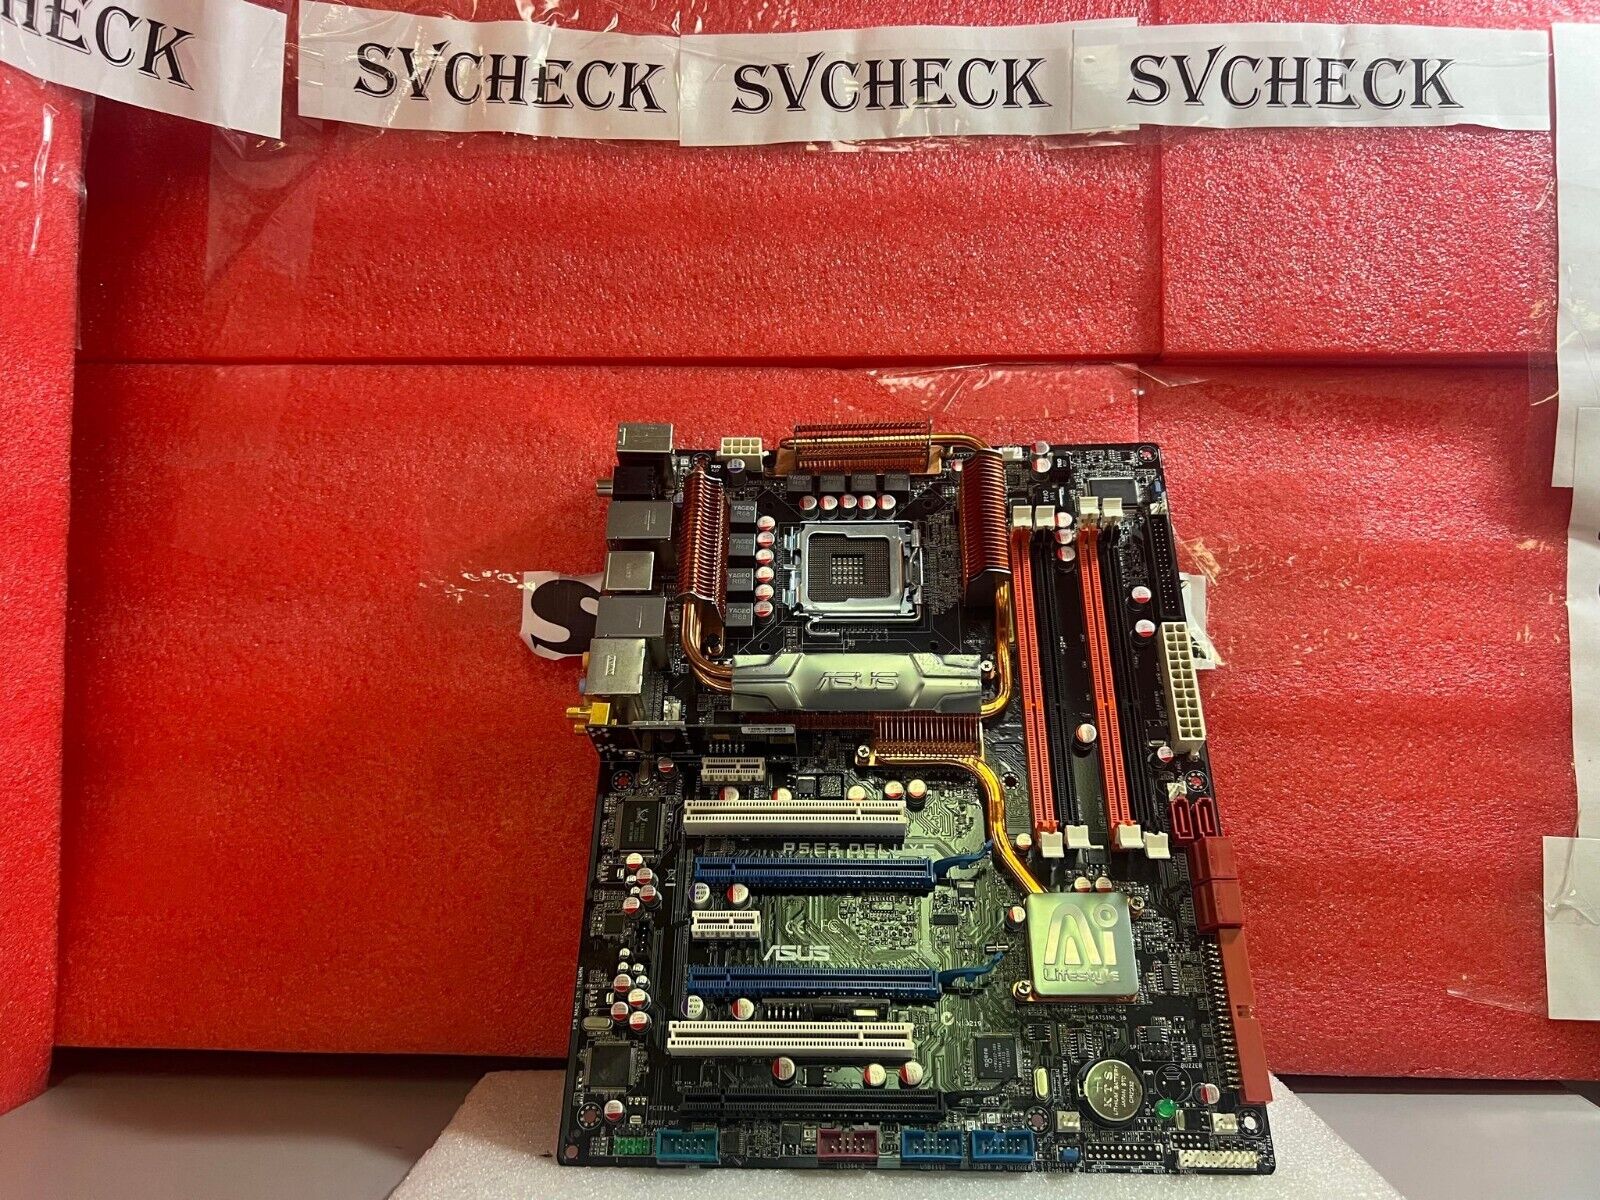 ASUS P5E3 Deluxe WiFi-AP Intel X38 Chipset LGA775 ATX Motherboard